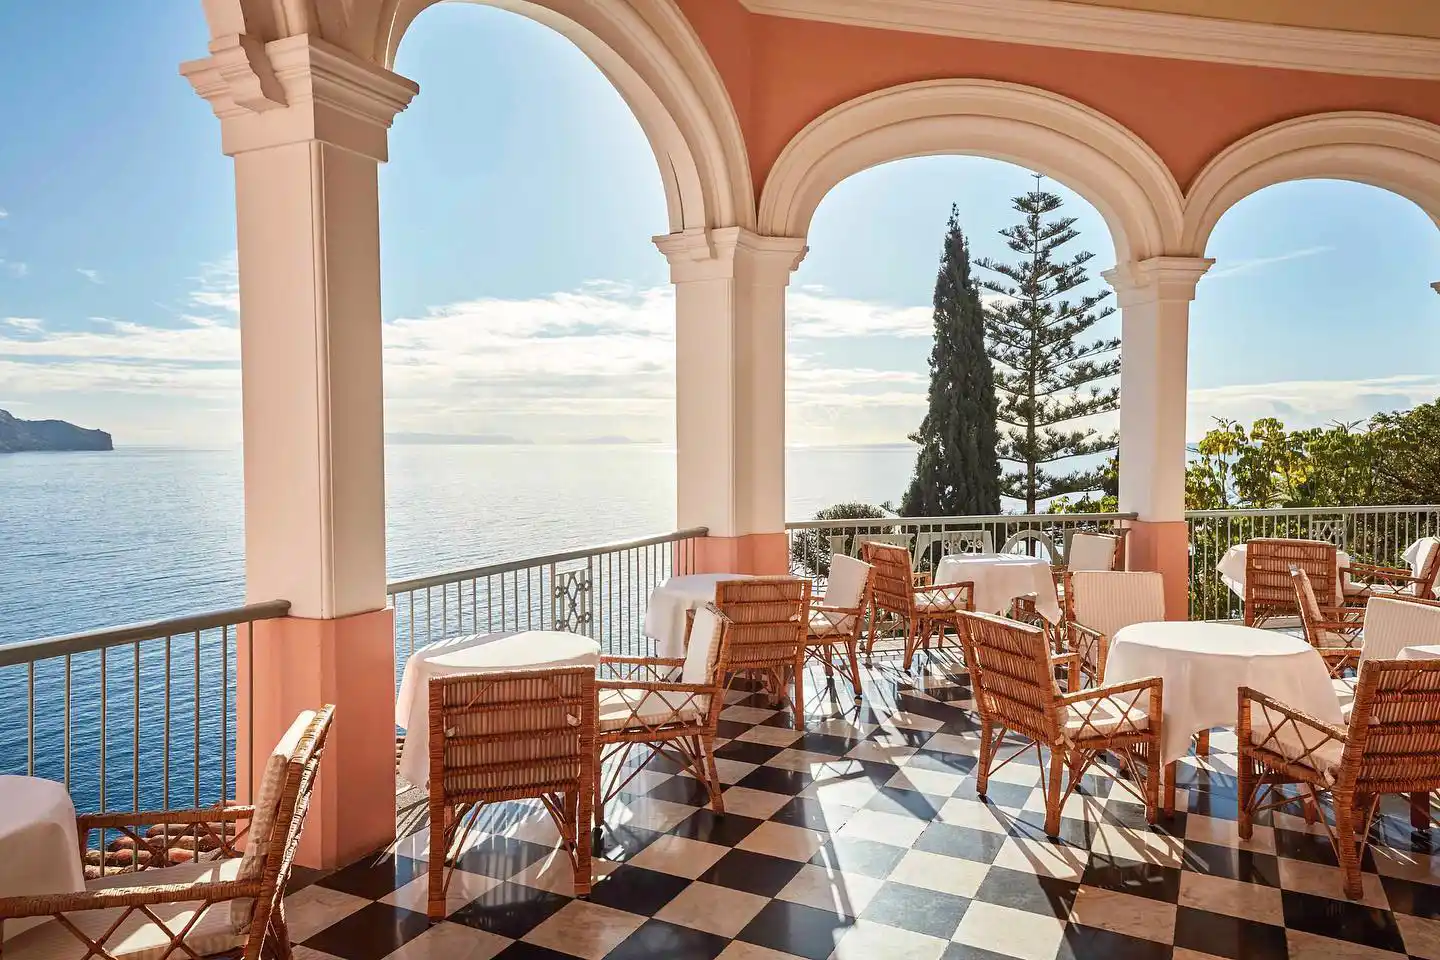 Terrasse vue océan, Belmond Reid's Palace, Funchal, Madère © Belmond Management Ltd